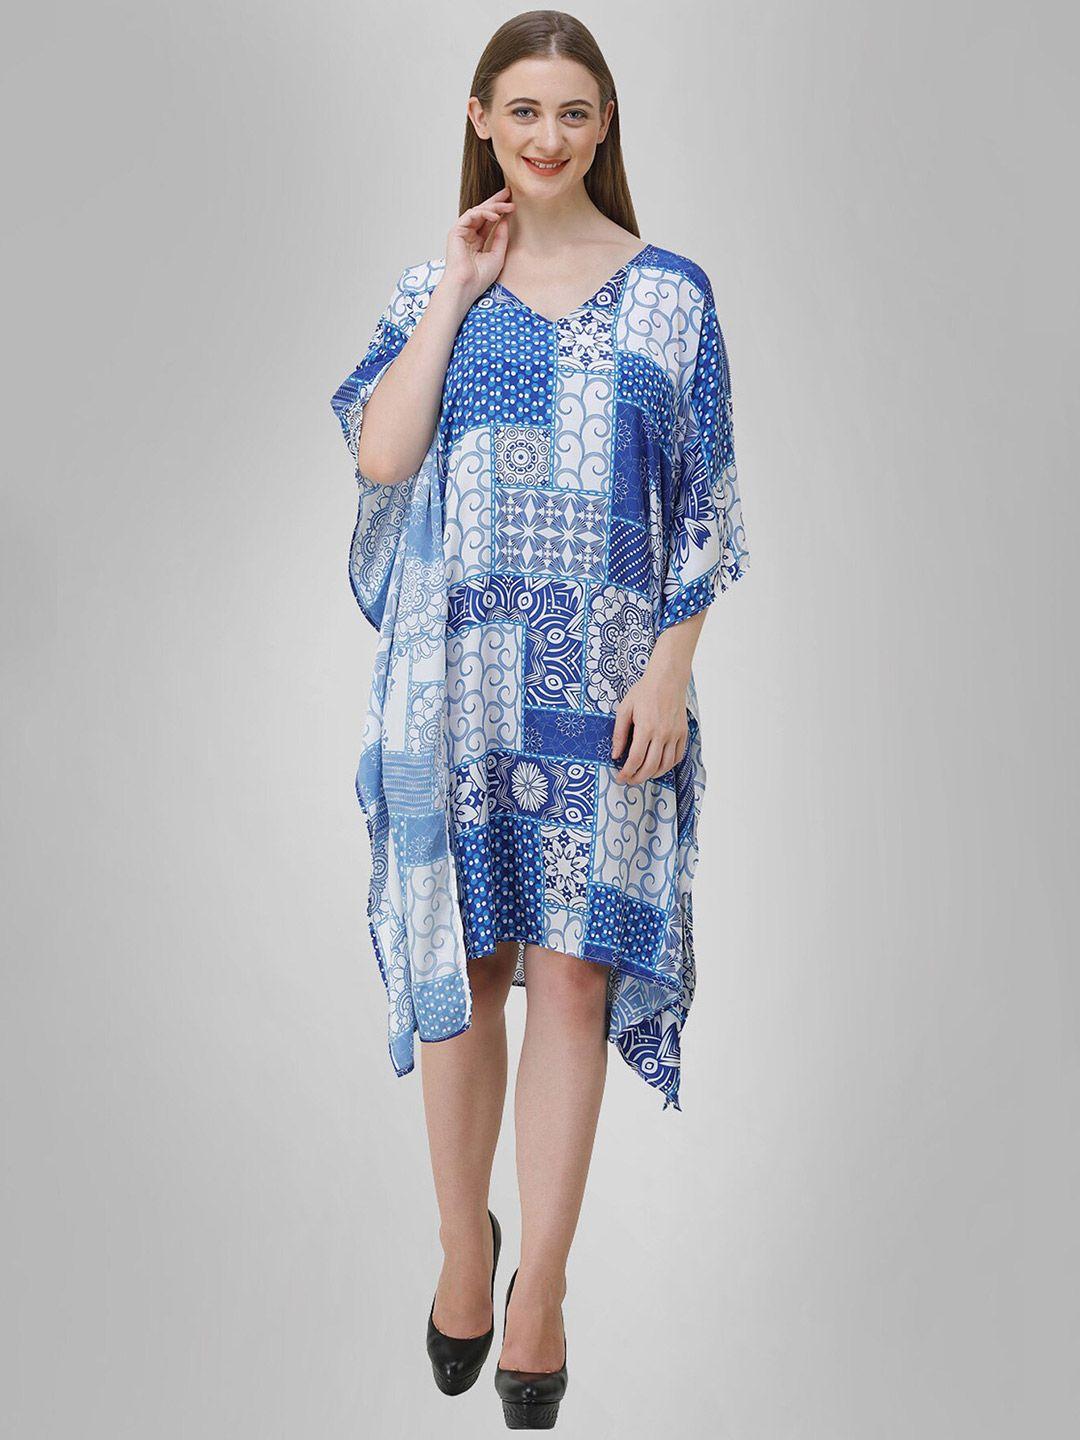 rajoria instyle blue & white ethnic motifs georgette ethnic kaftan dress